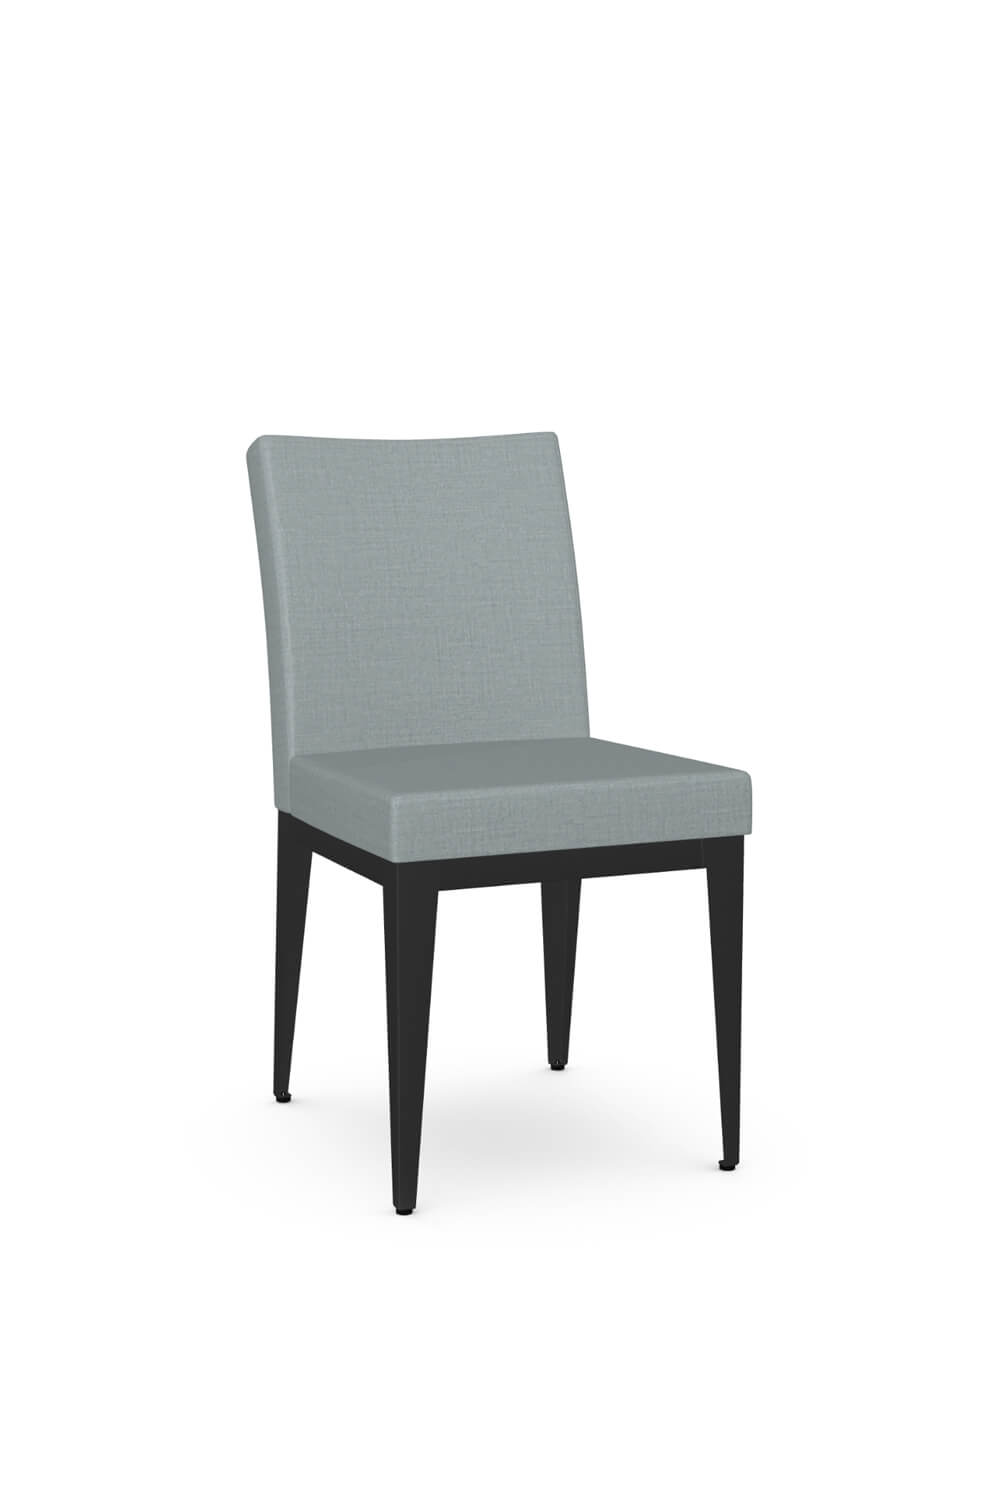 pedro modern dining chair